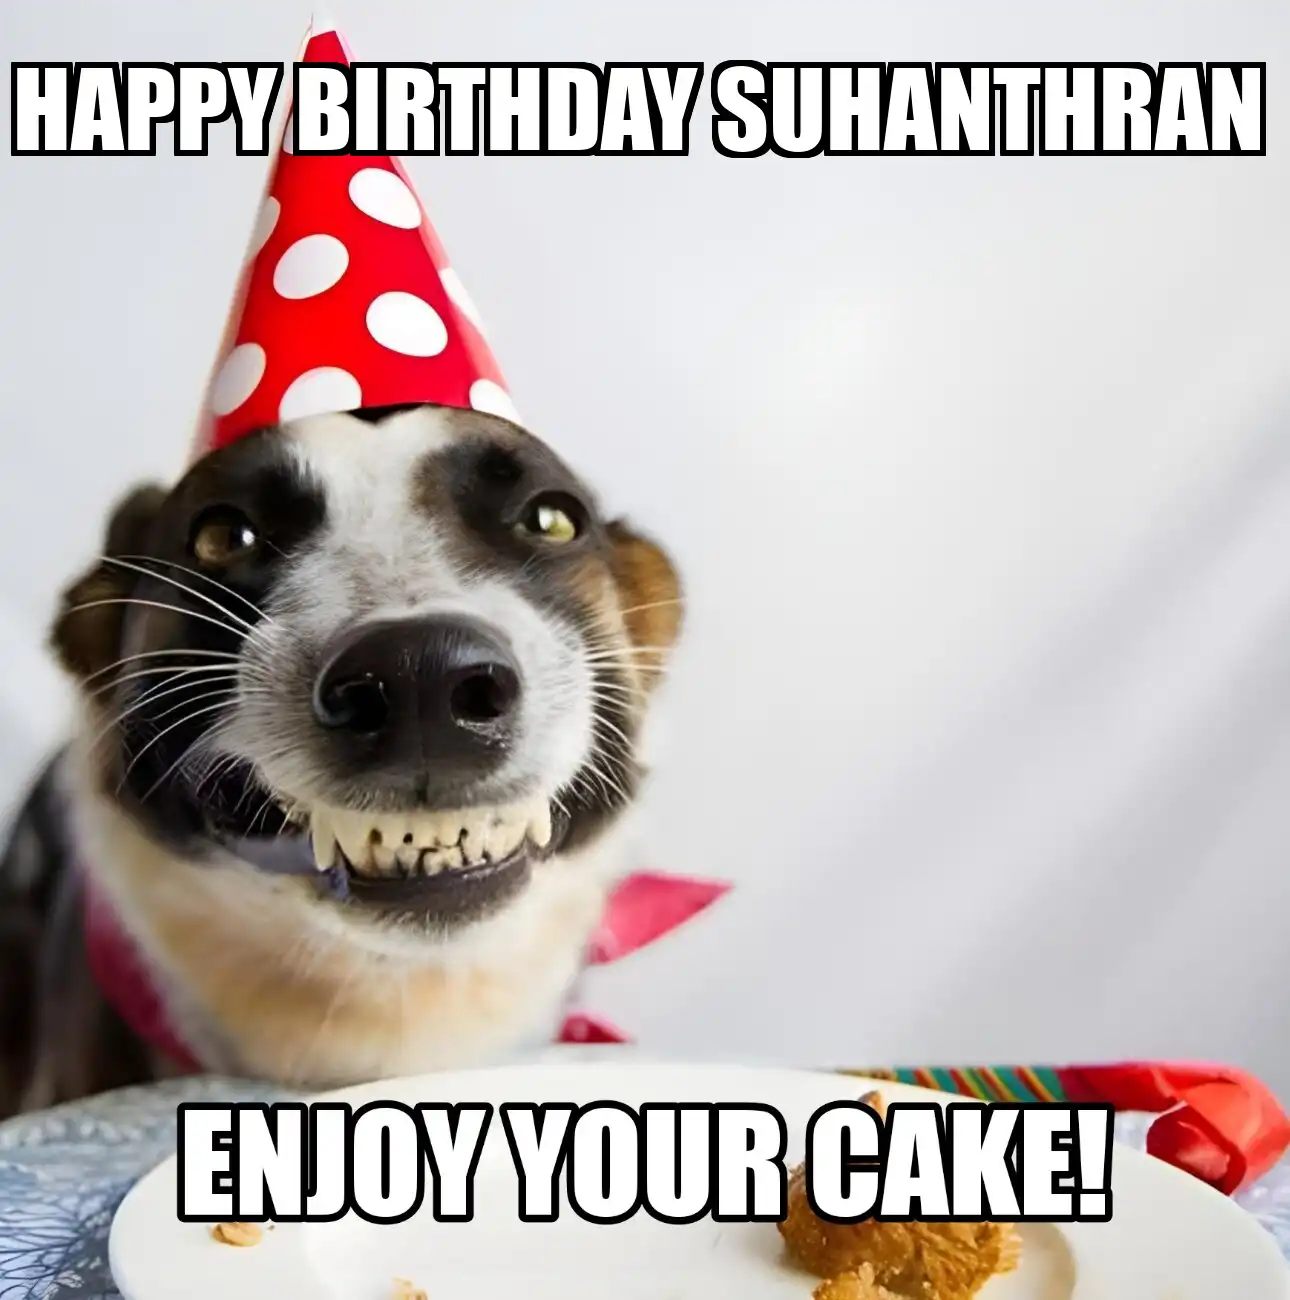 Happy Birthday Suhanthran Enjoy Your Cake Dog Meme